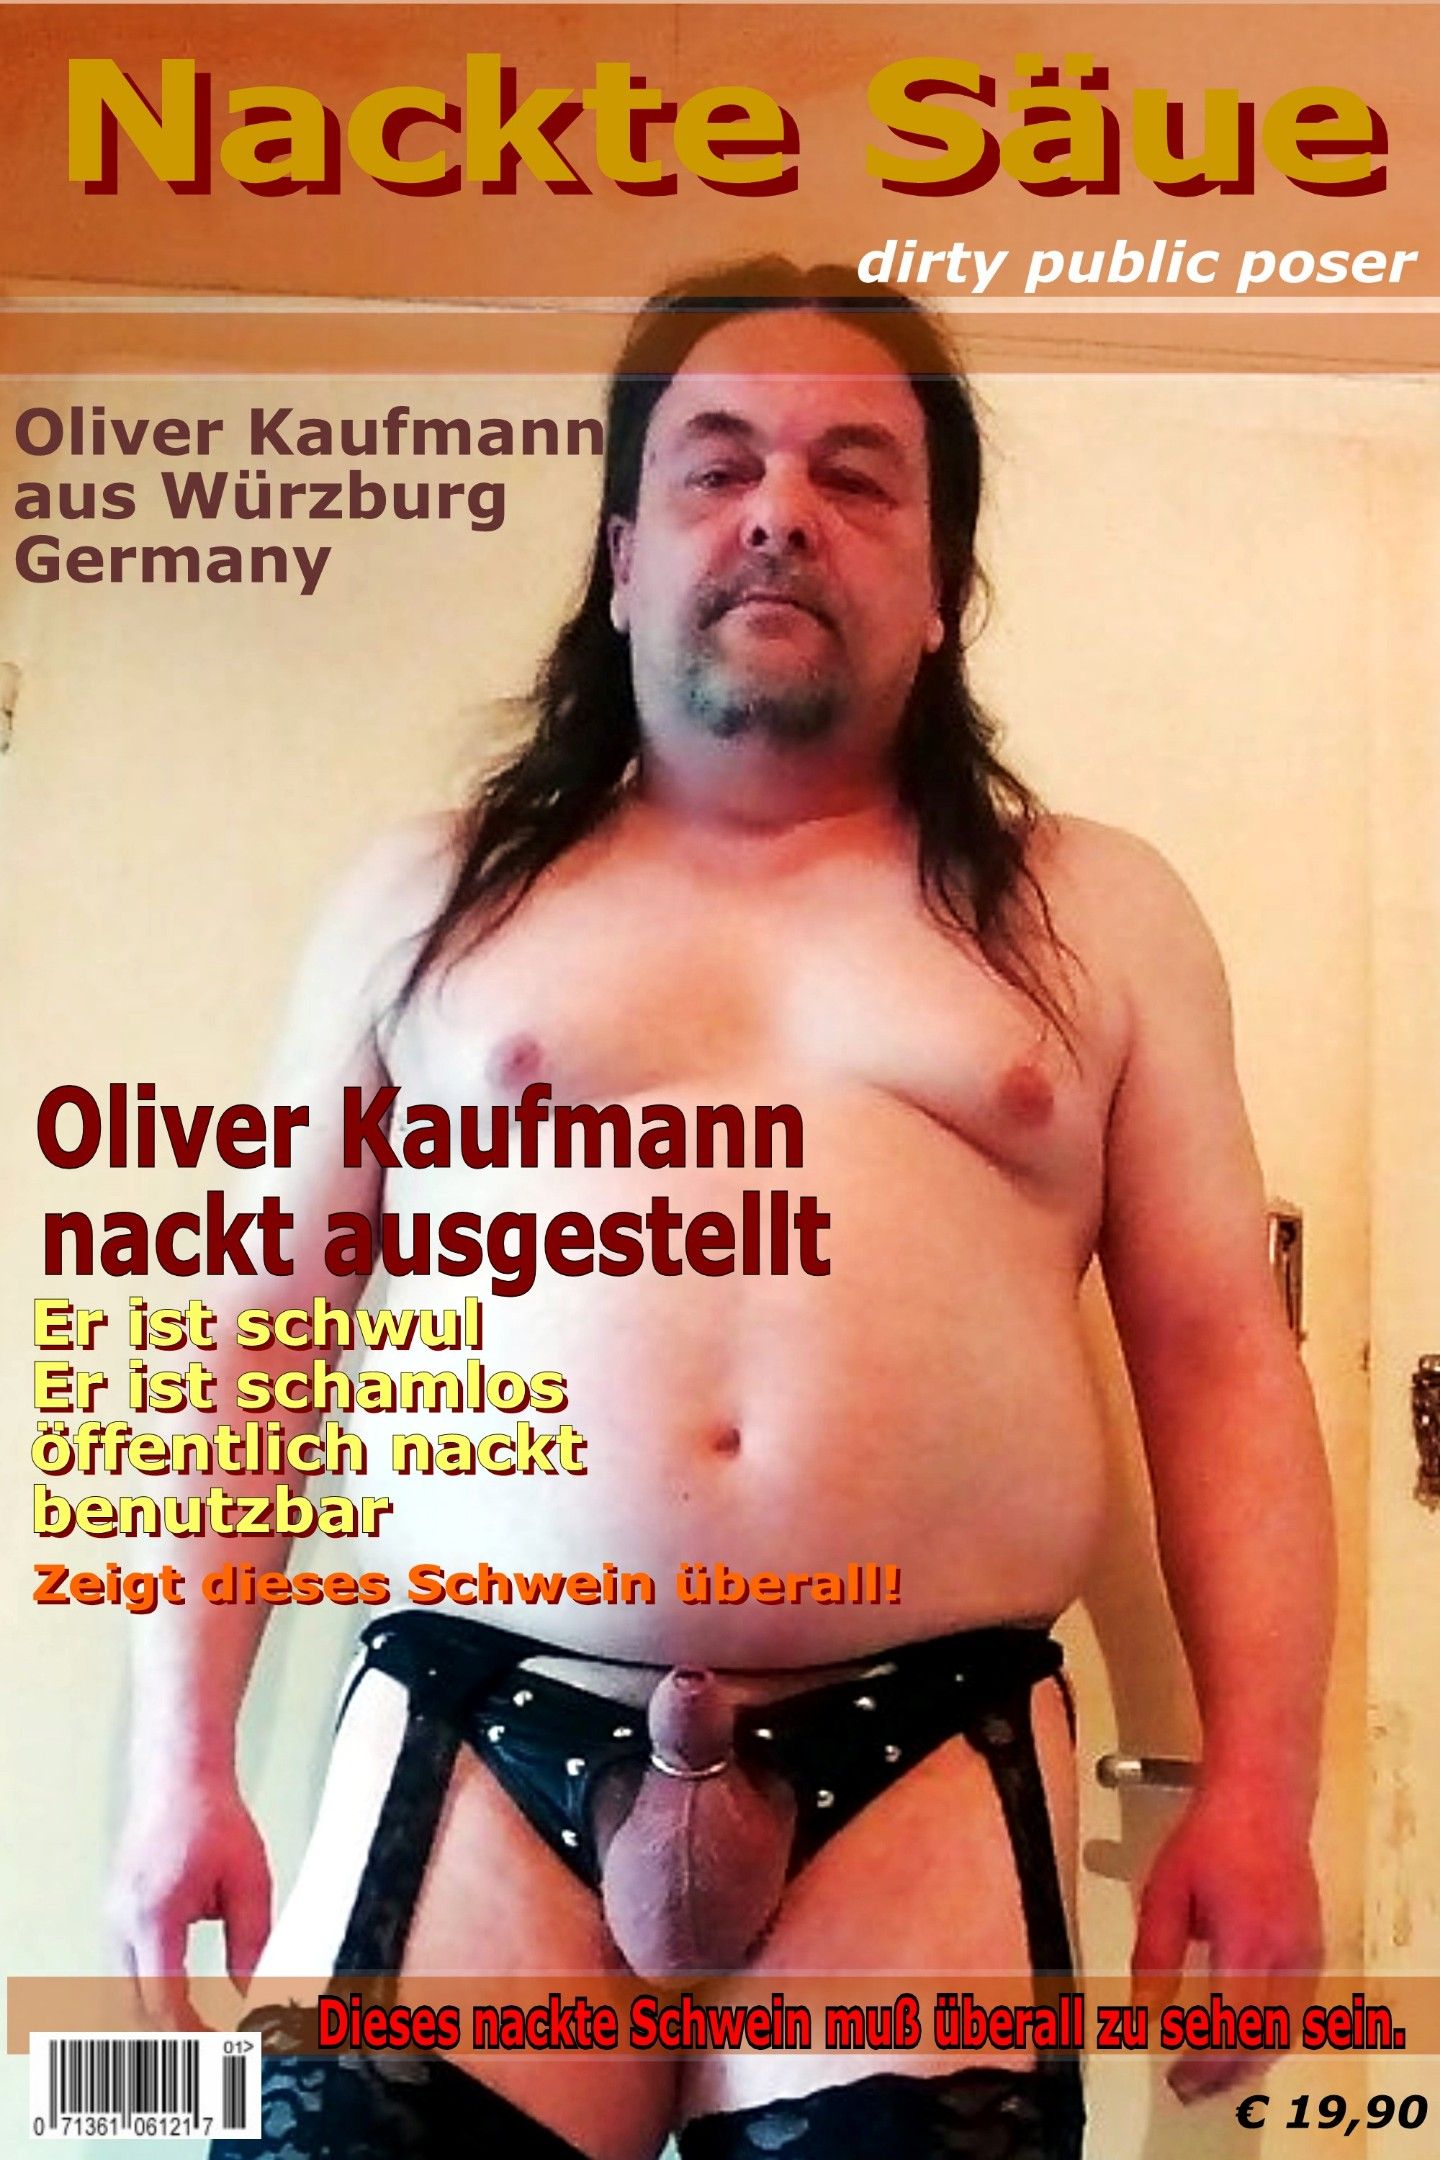 Nacktsau Okiver Kaufmann